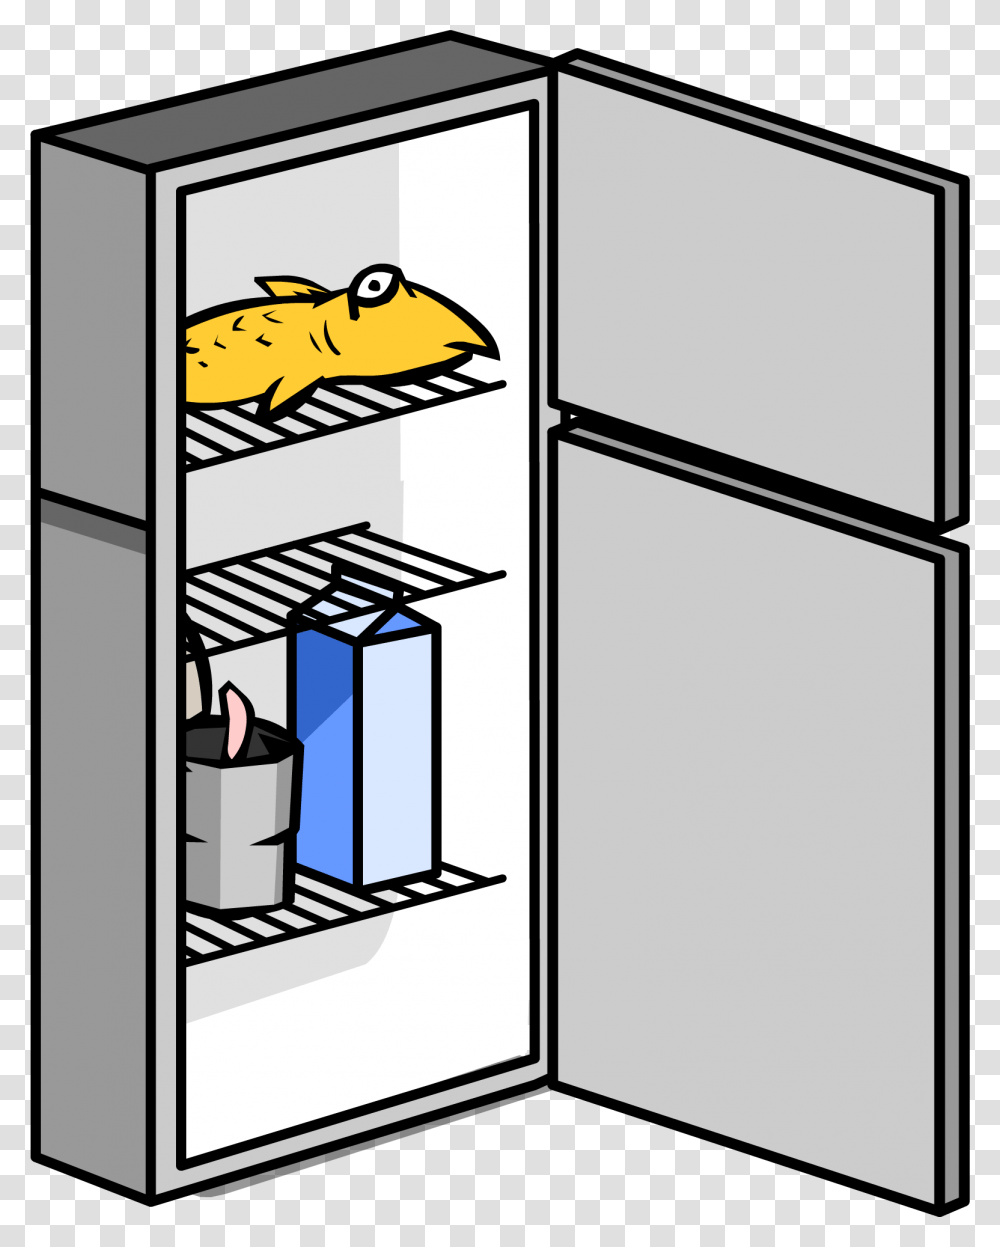 Stainless Steel Fridge Sprite Refrigerator Cartoon, Appliance, Shelf, Furniture, Cupboard Transparent Png